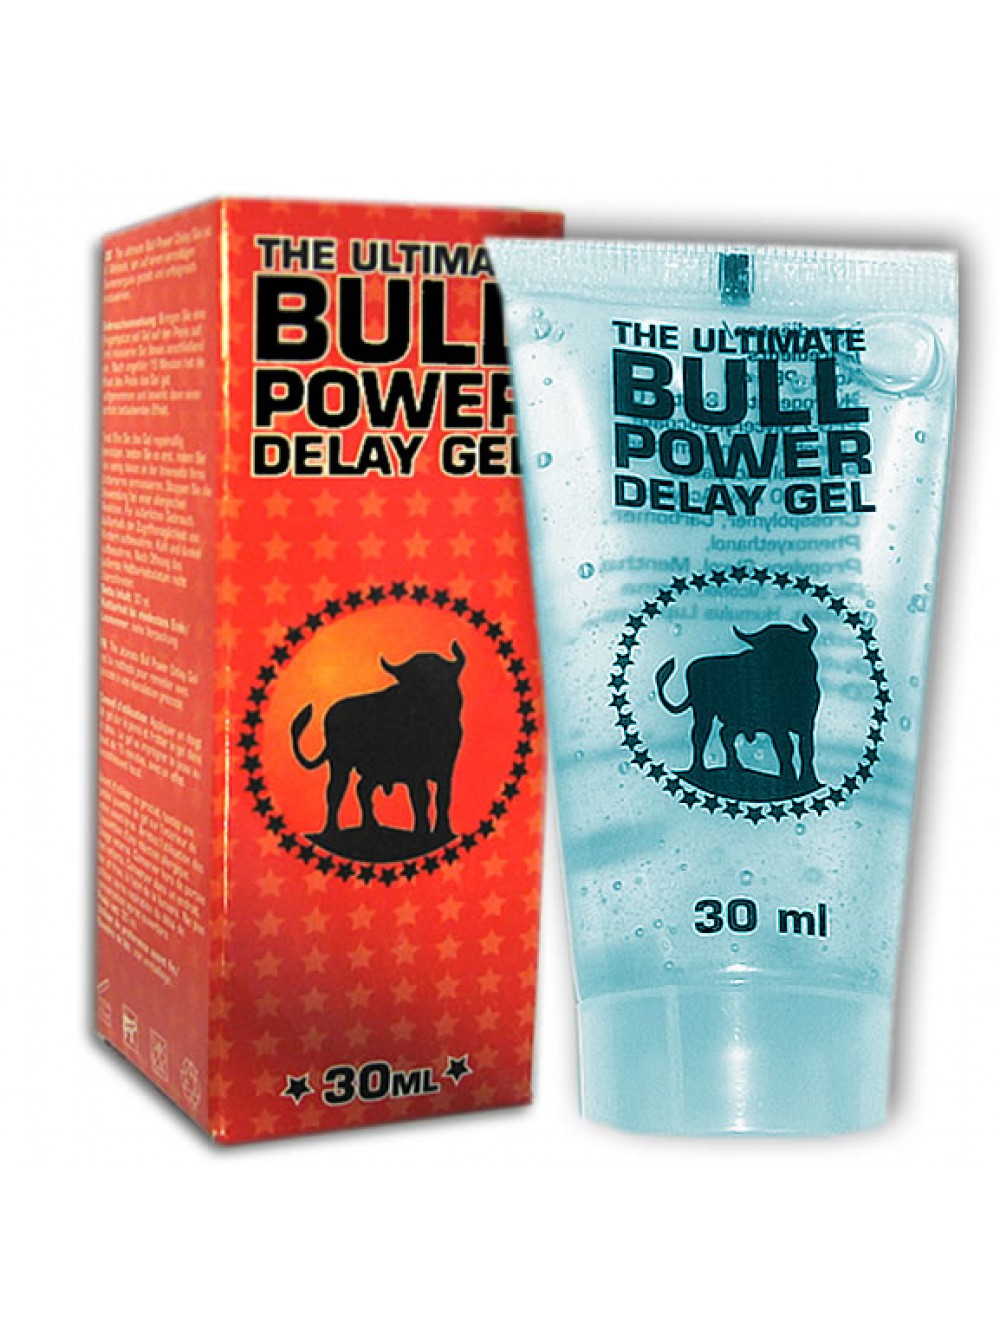 The Ultimate Bull Power Delay Gel